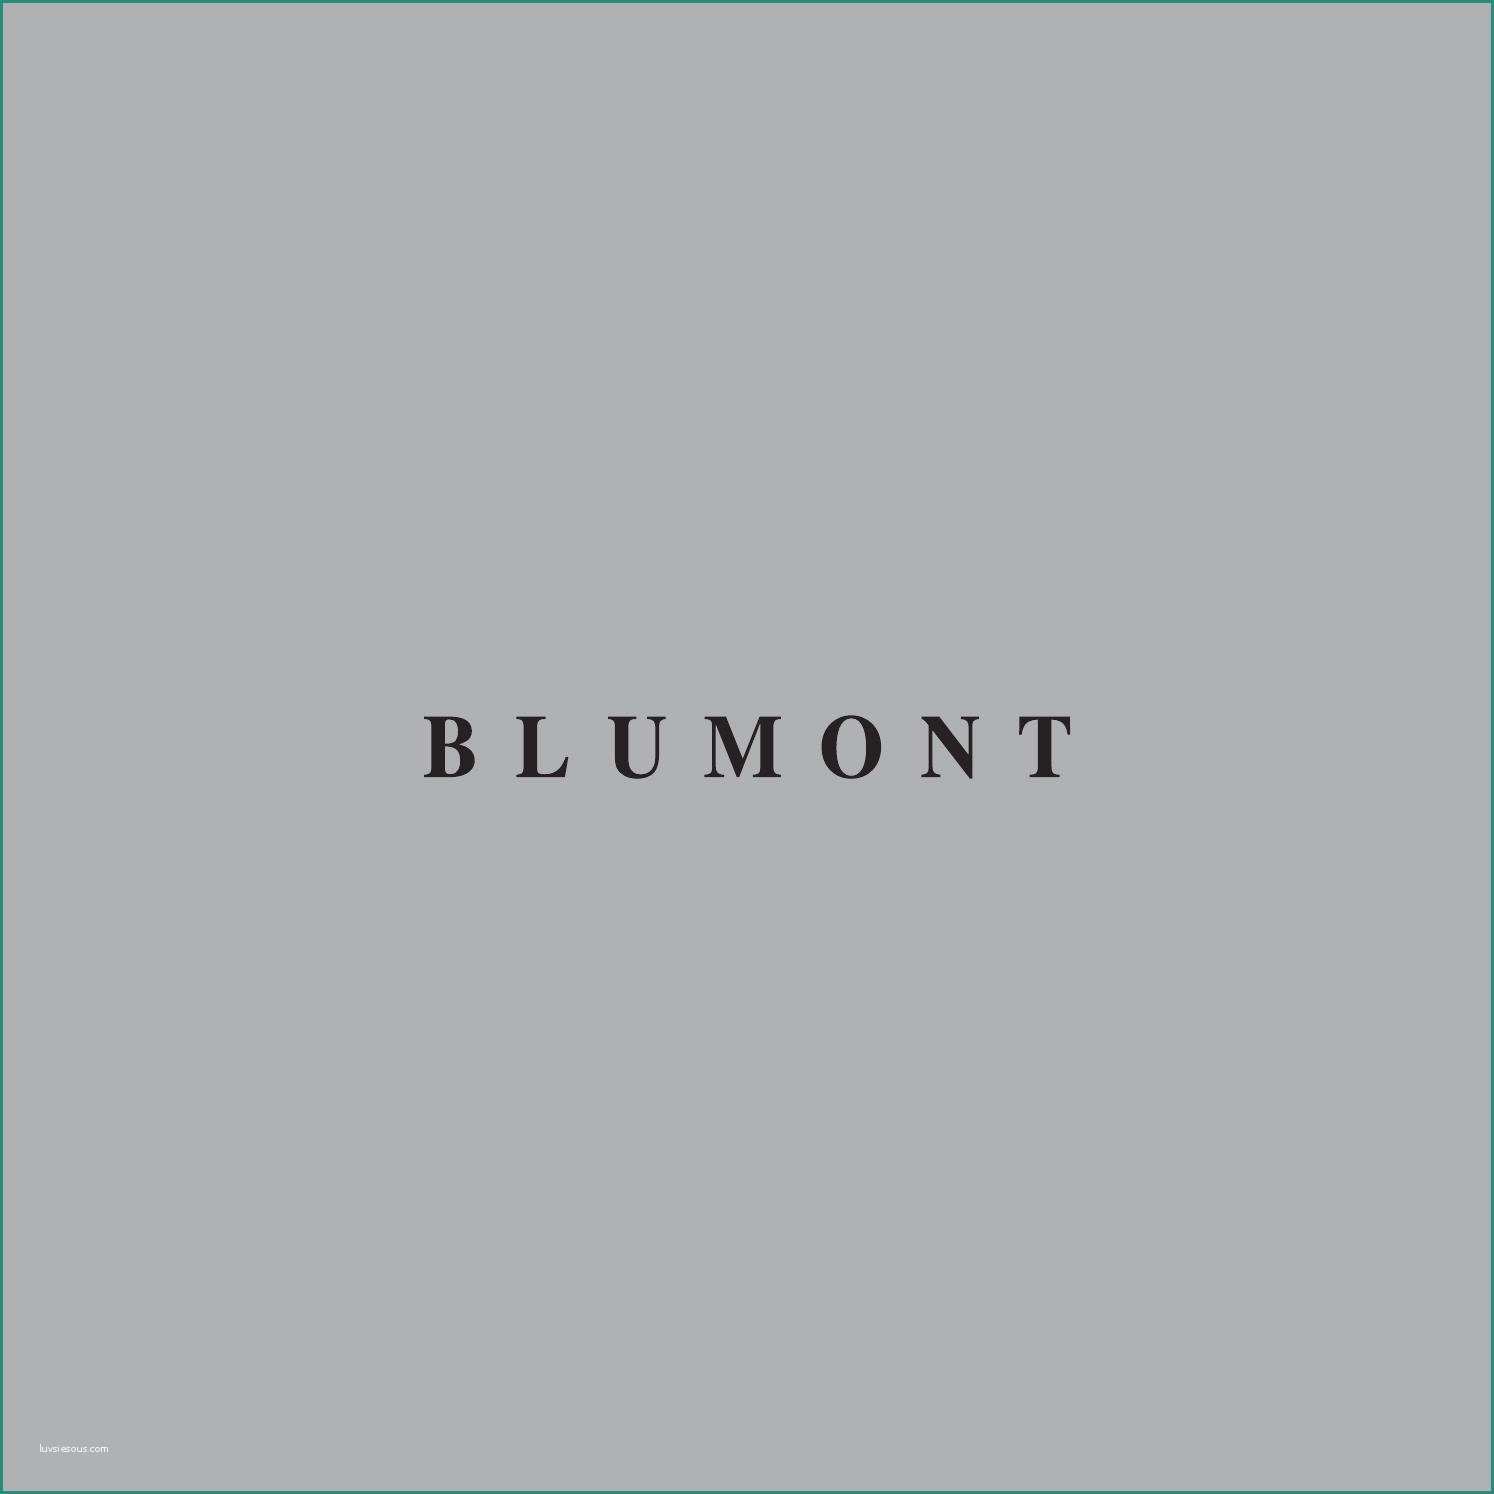 Ville Moderne Progetti E Blumont 2013 by Auxonet Auxonet issuu